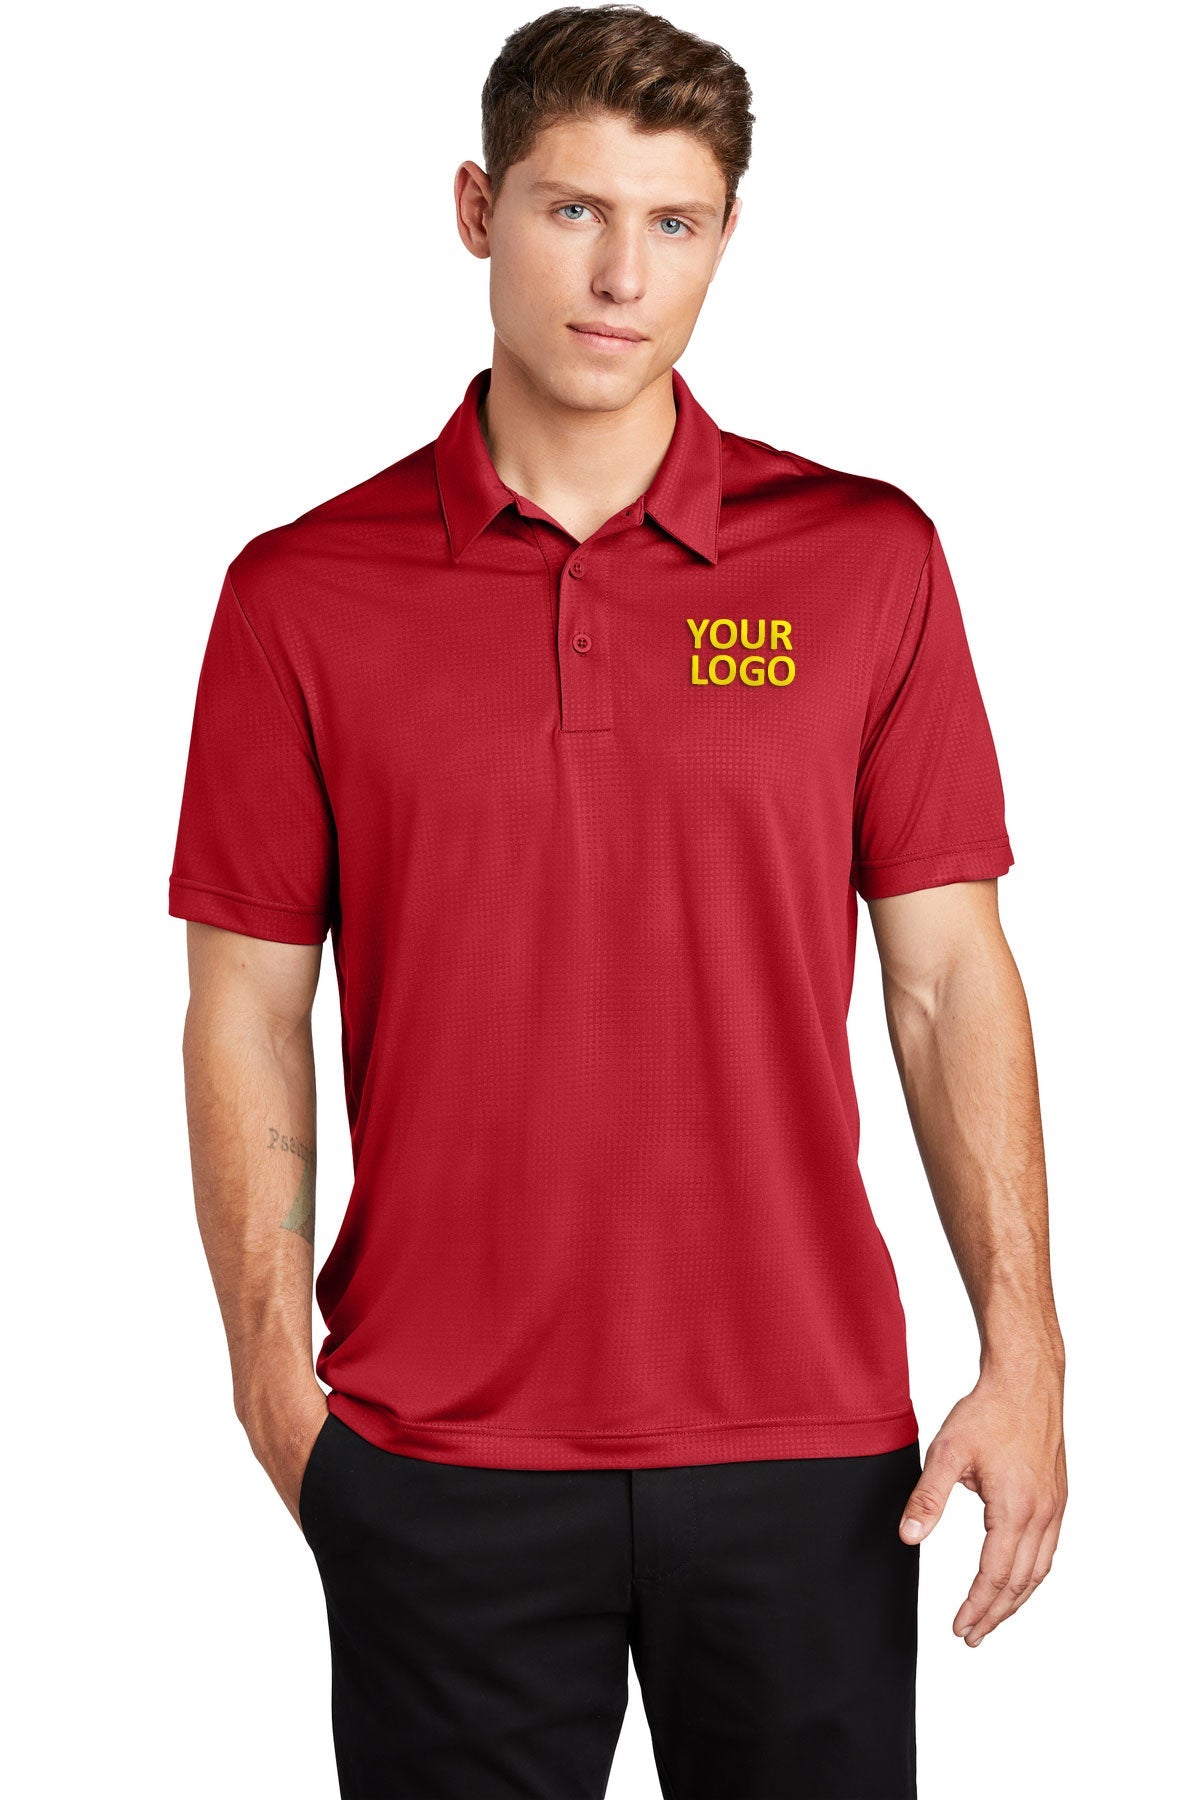 Sport-Tek Deep Red ST630 corporate logo polo shirts